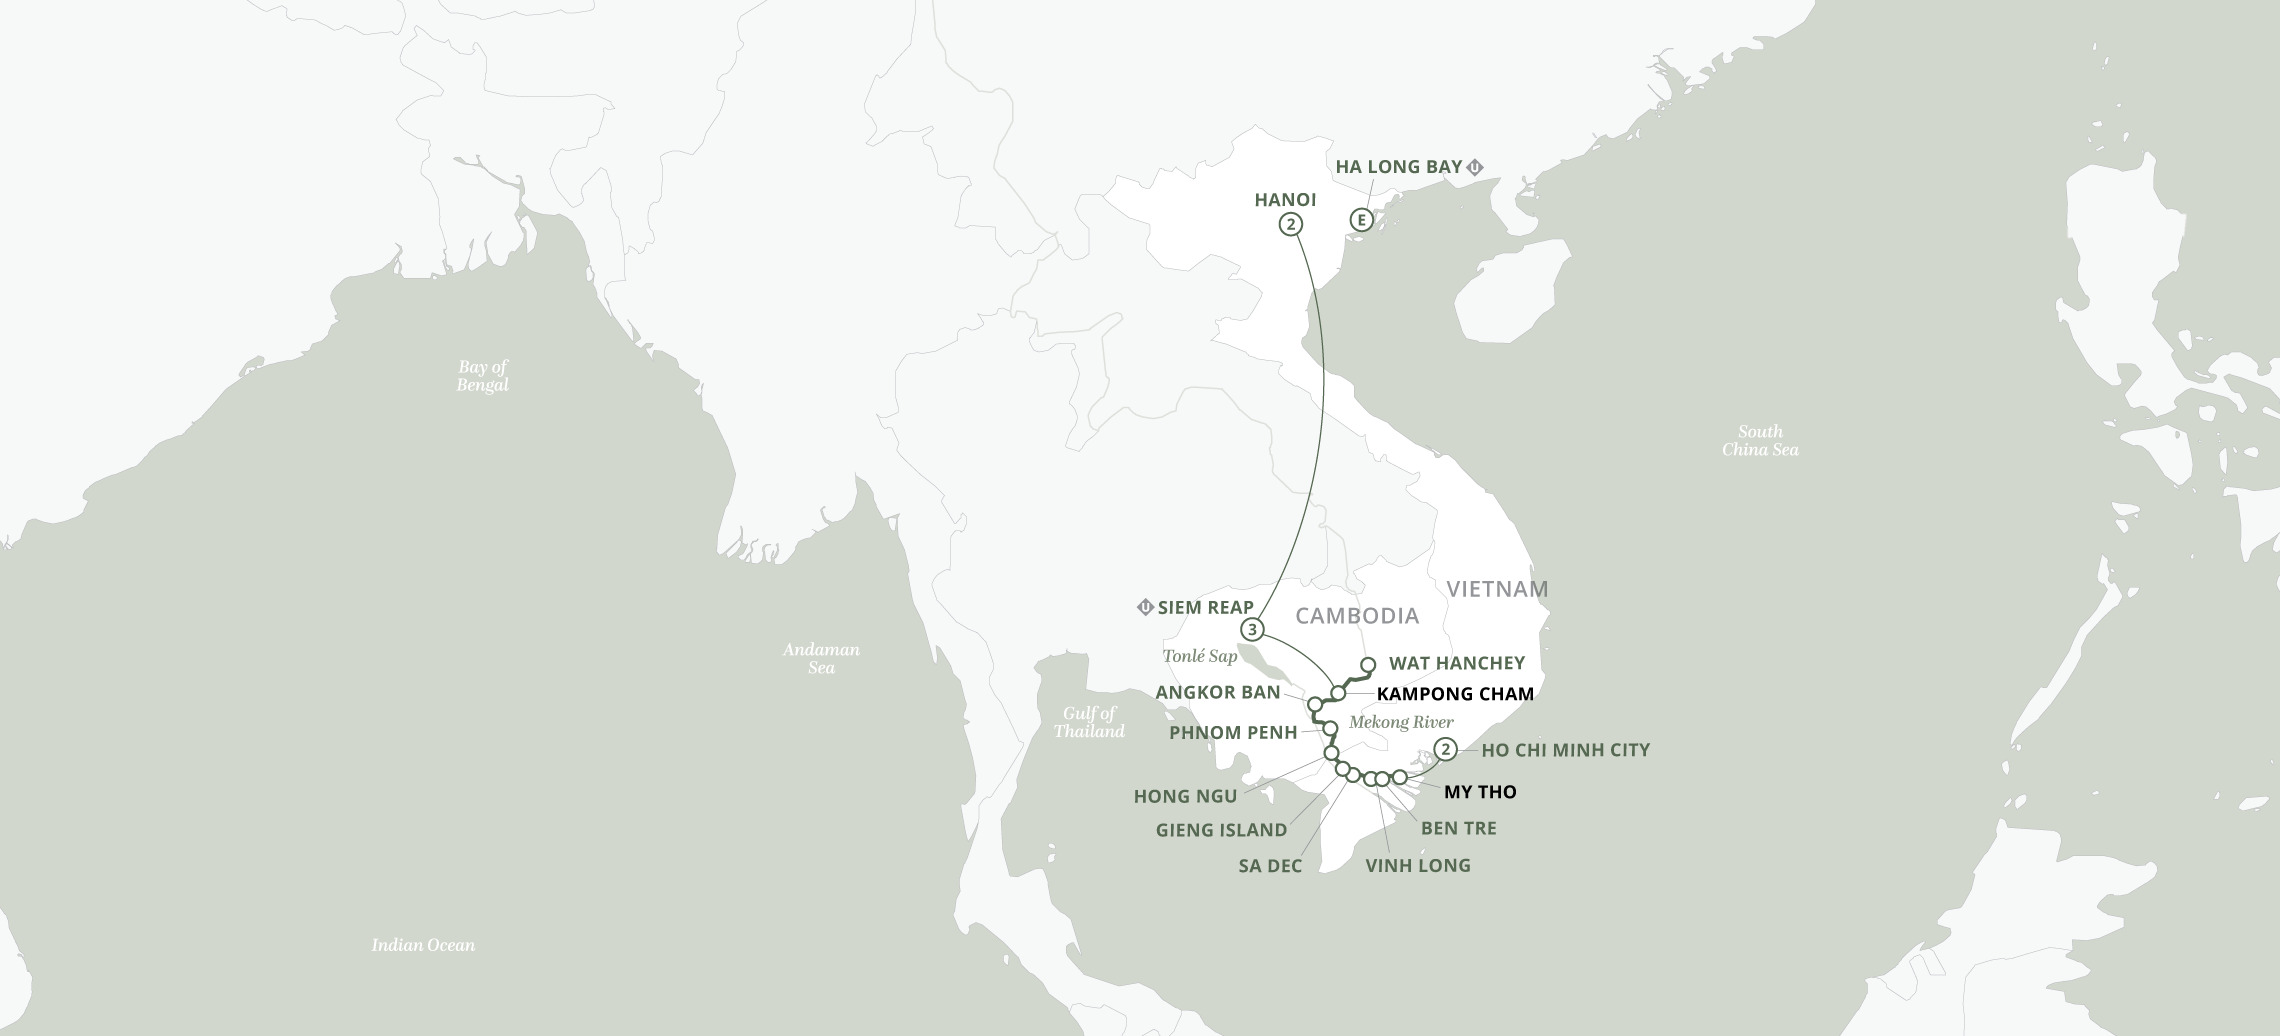 Timeless Wonders of Vietnam, Cambodia & the Mekong Map